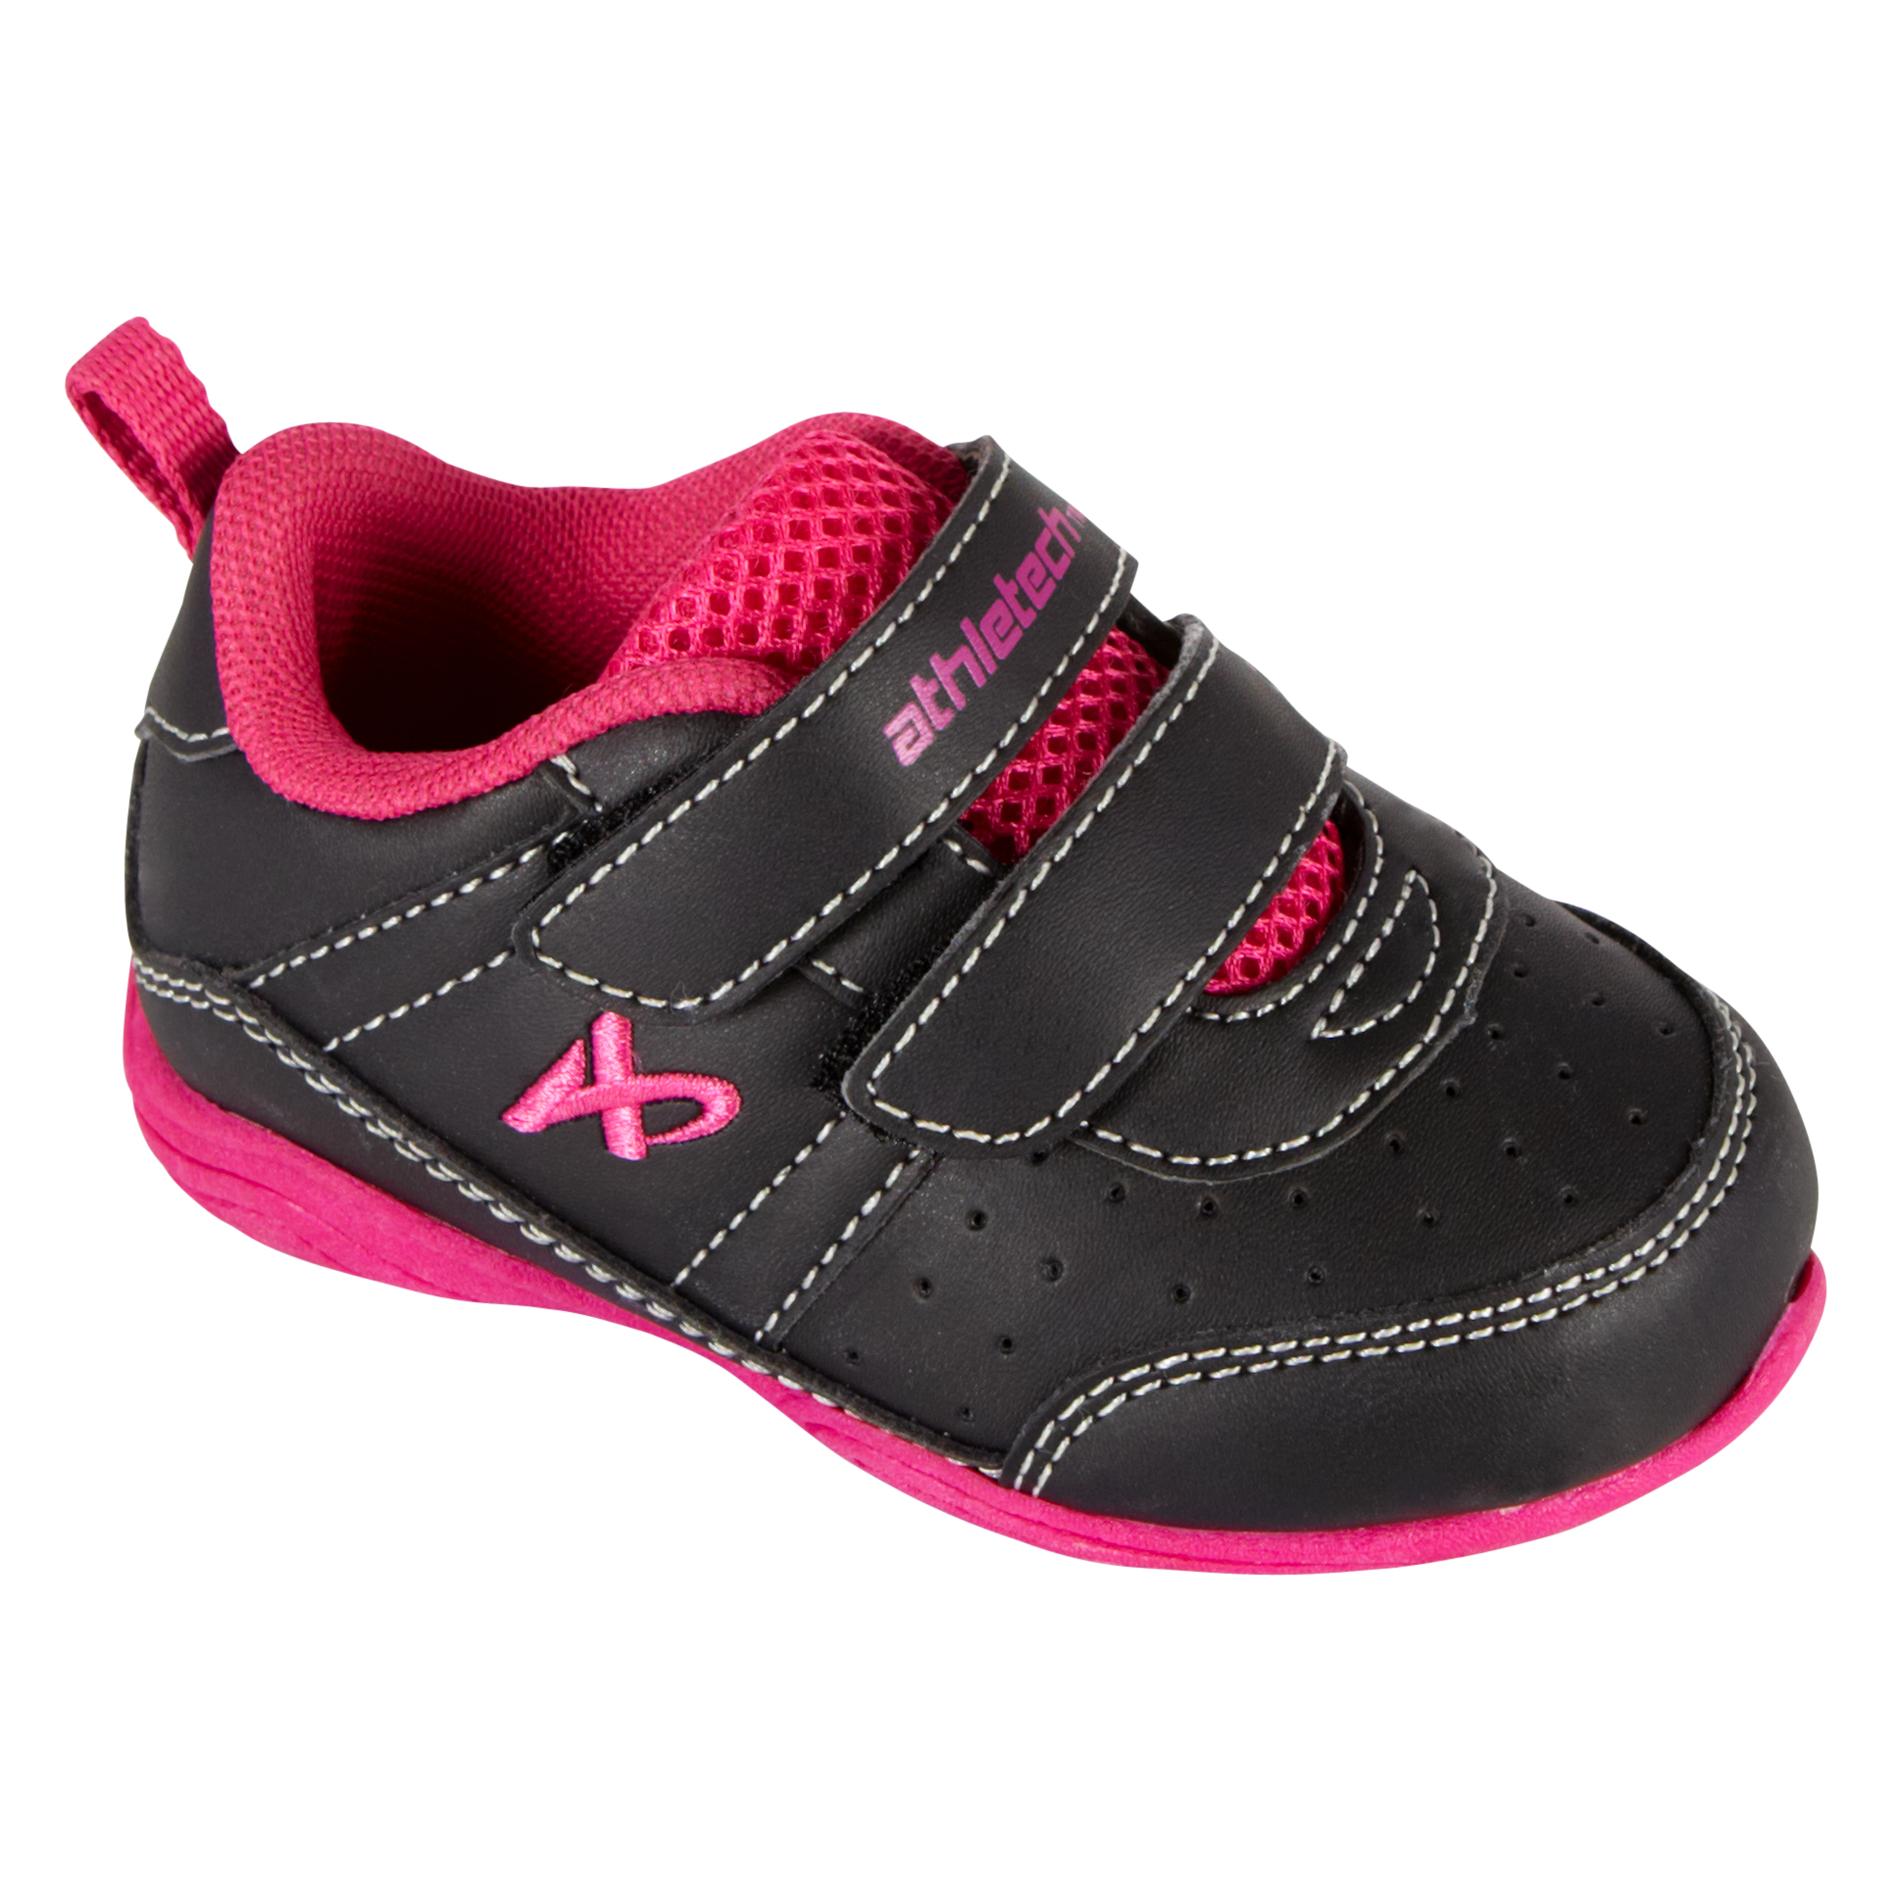 Athletech Baby Girl's Cruiser Black/Pink Athletic Shoe